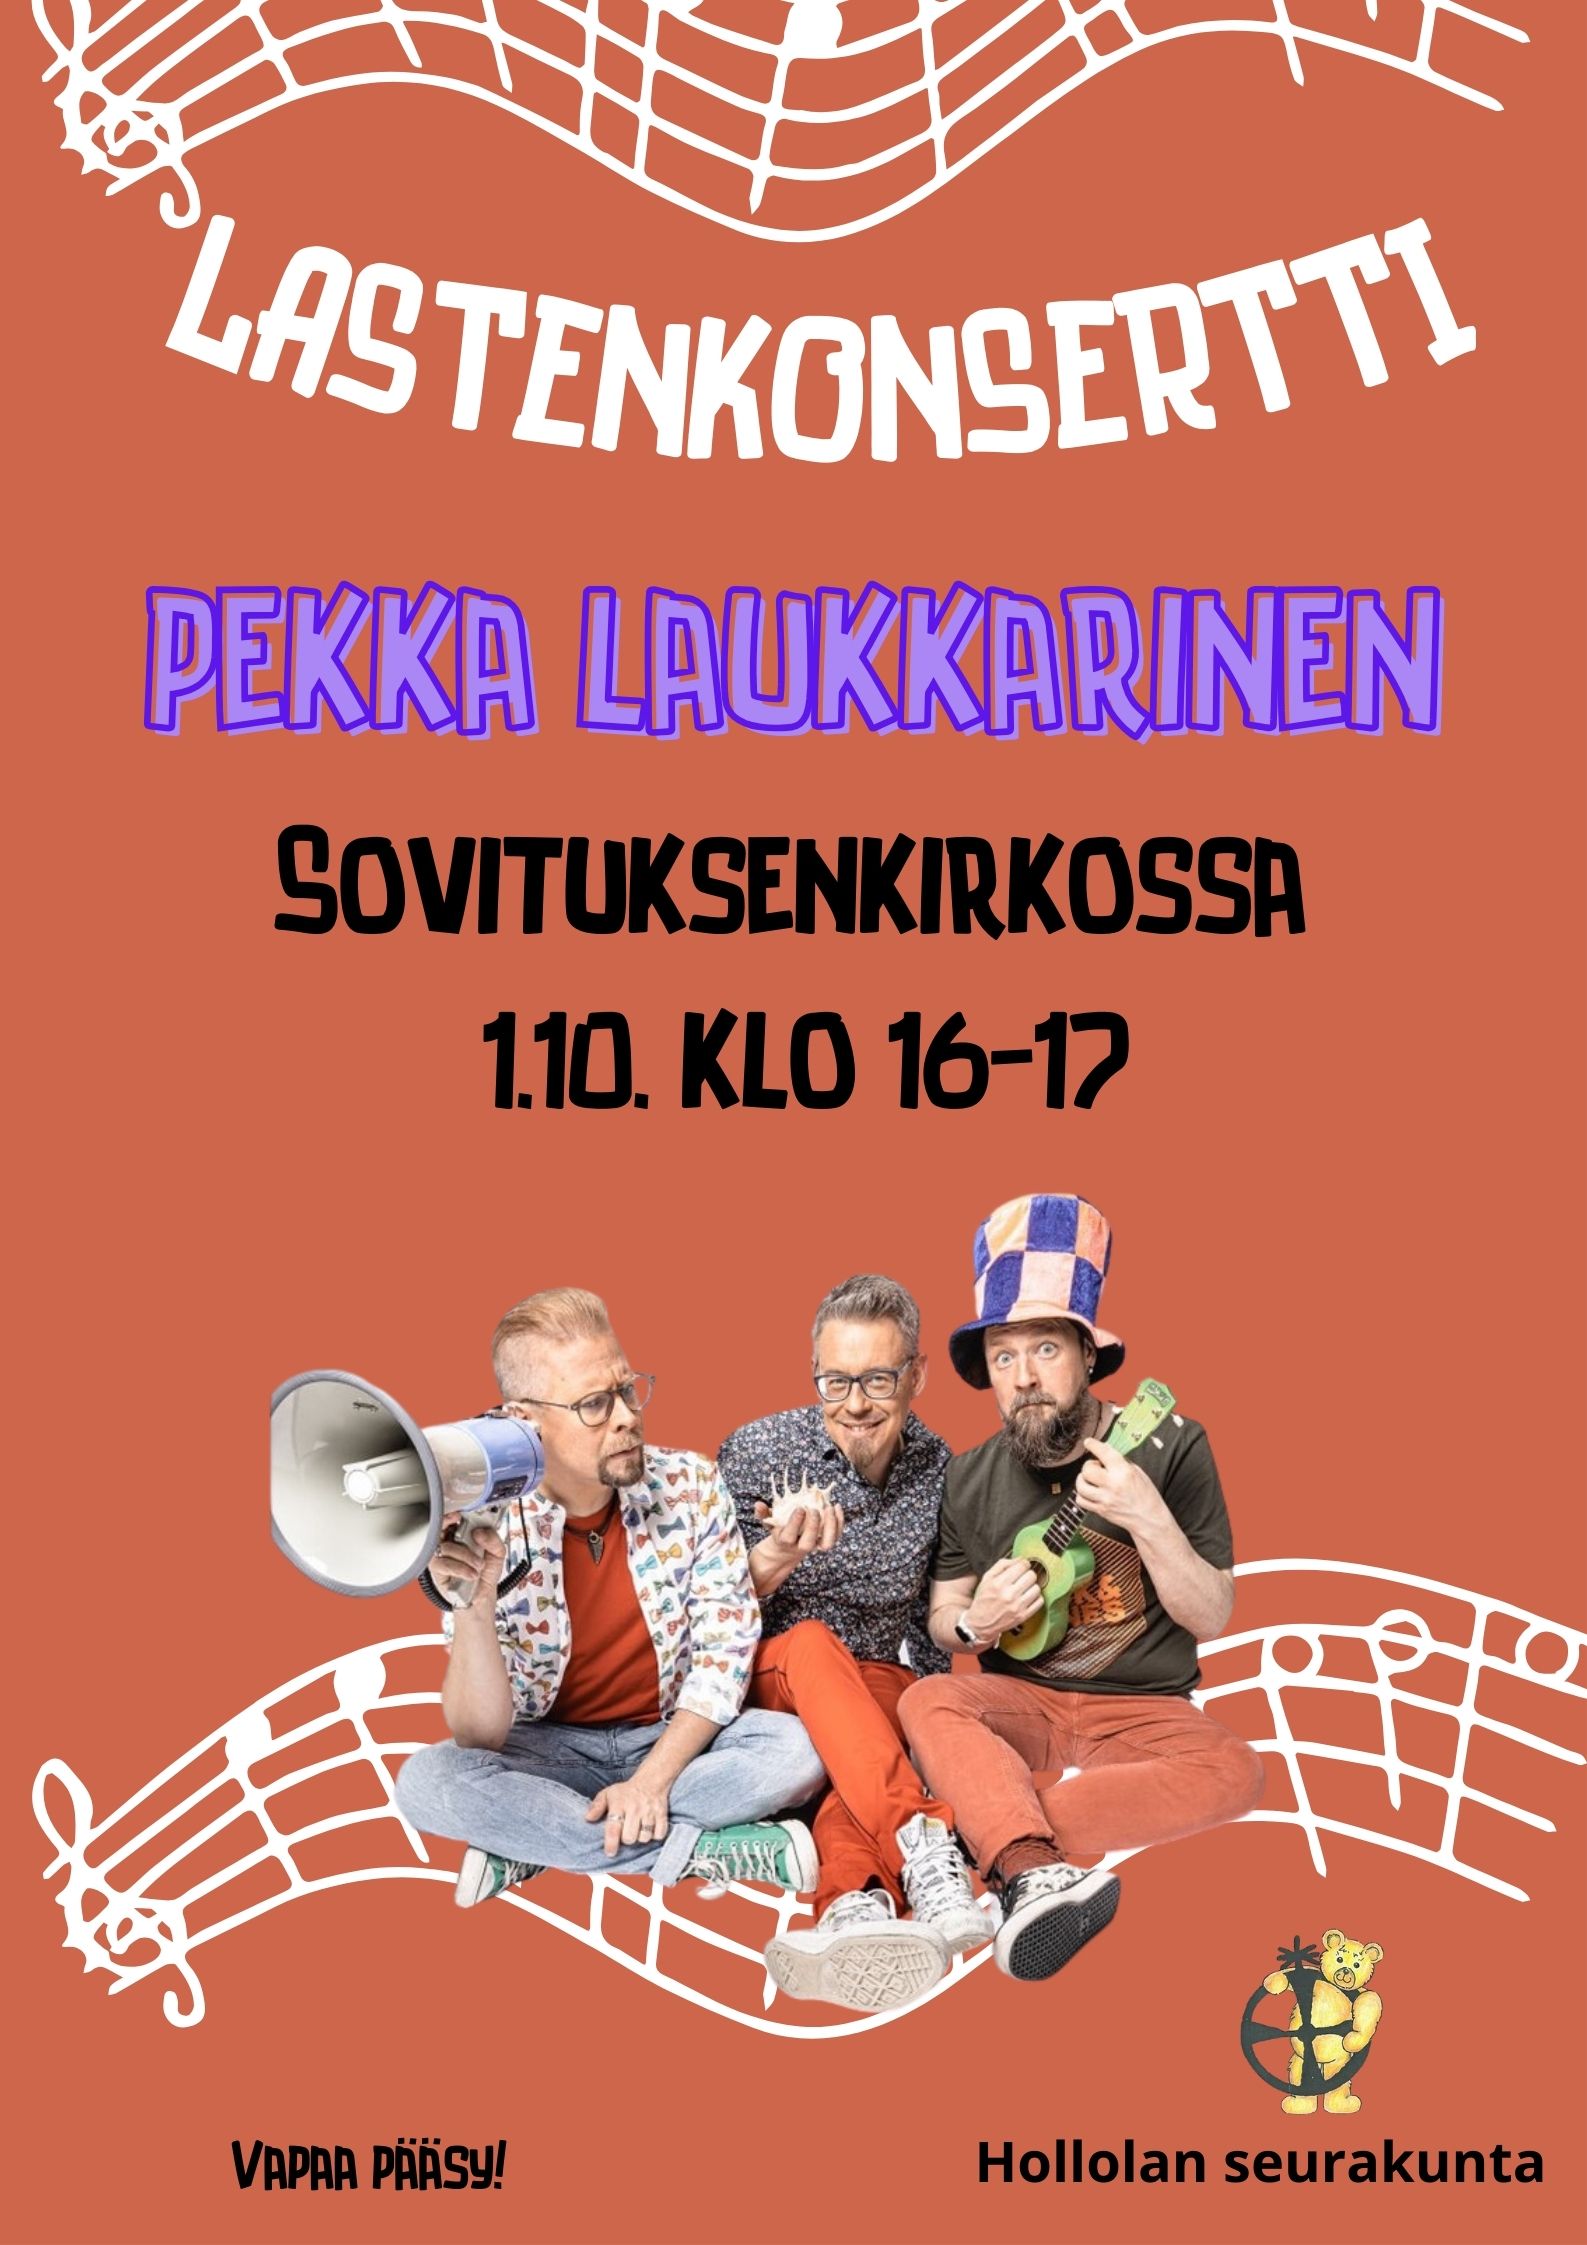 Pekka Laukkarinen Trio